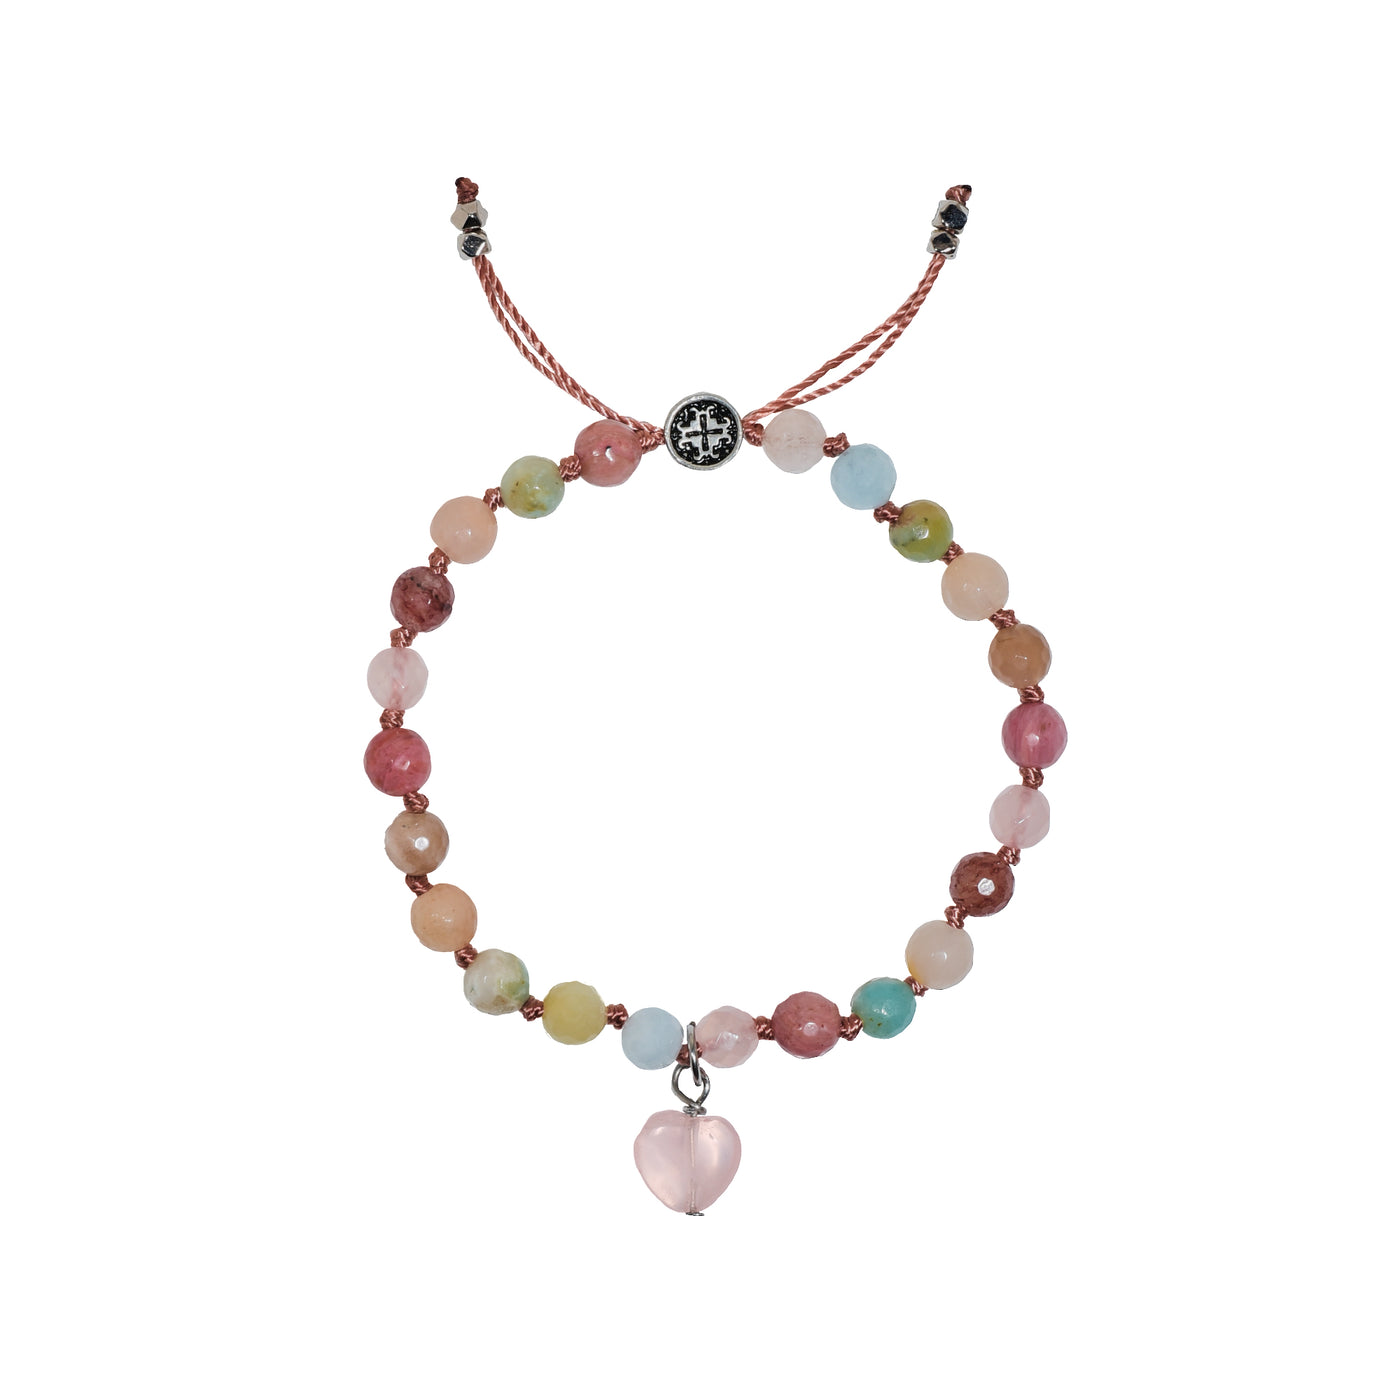 MATA MALA: Gemstone Mix Hand-knotted Bracelet with Rose Quartz Heart Charm